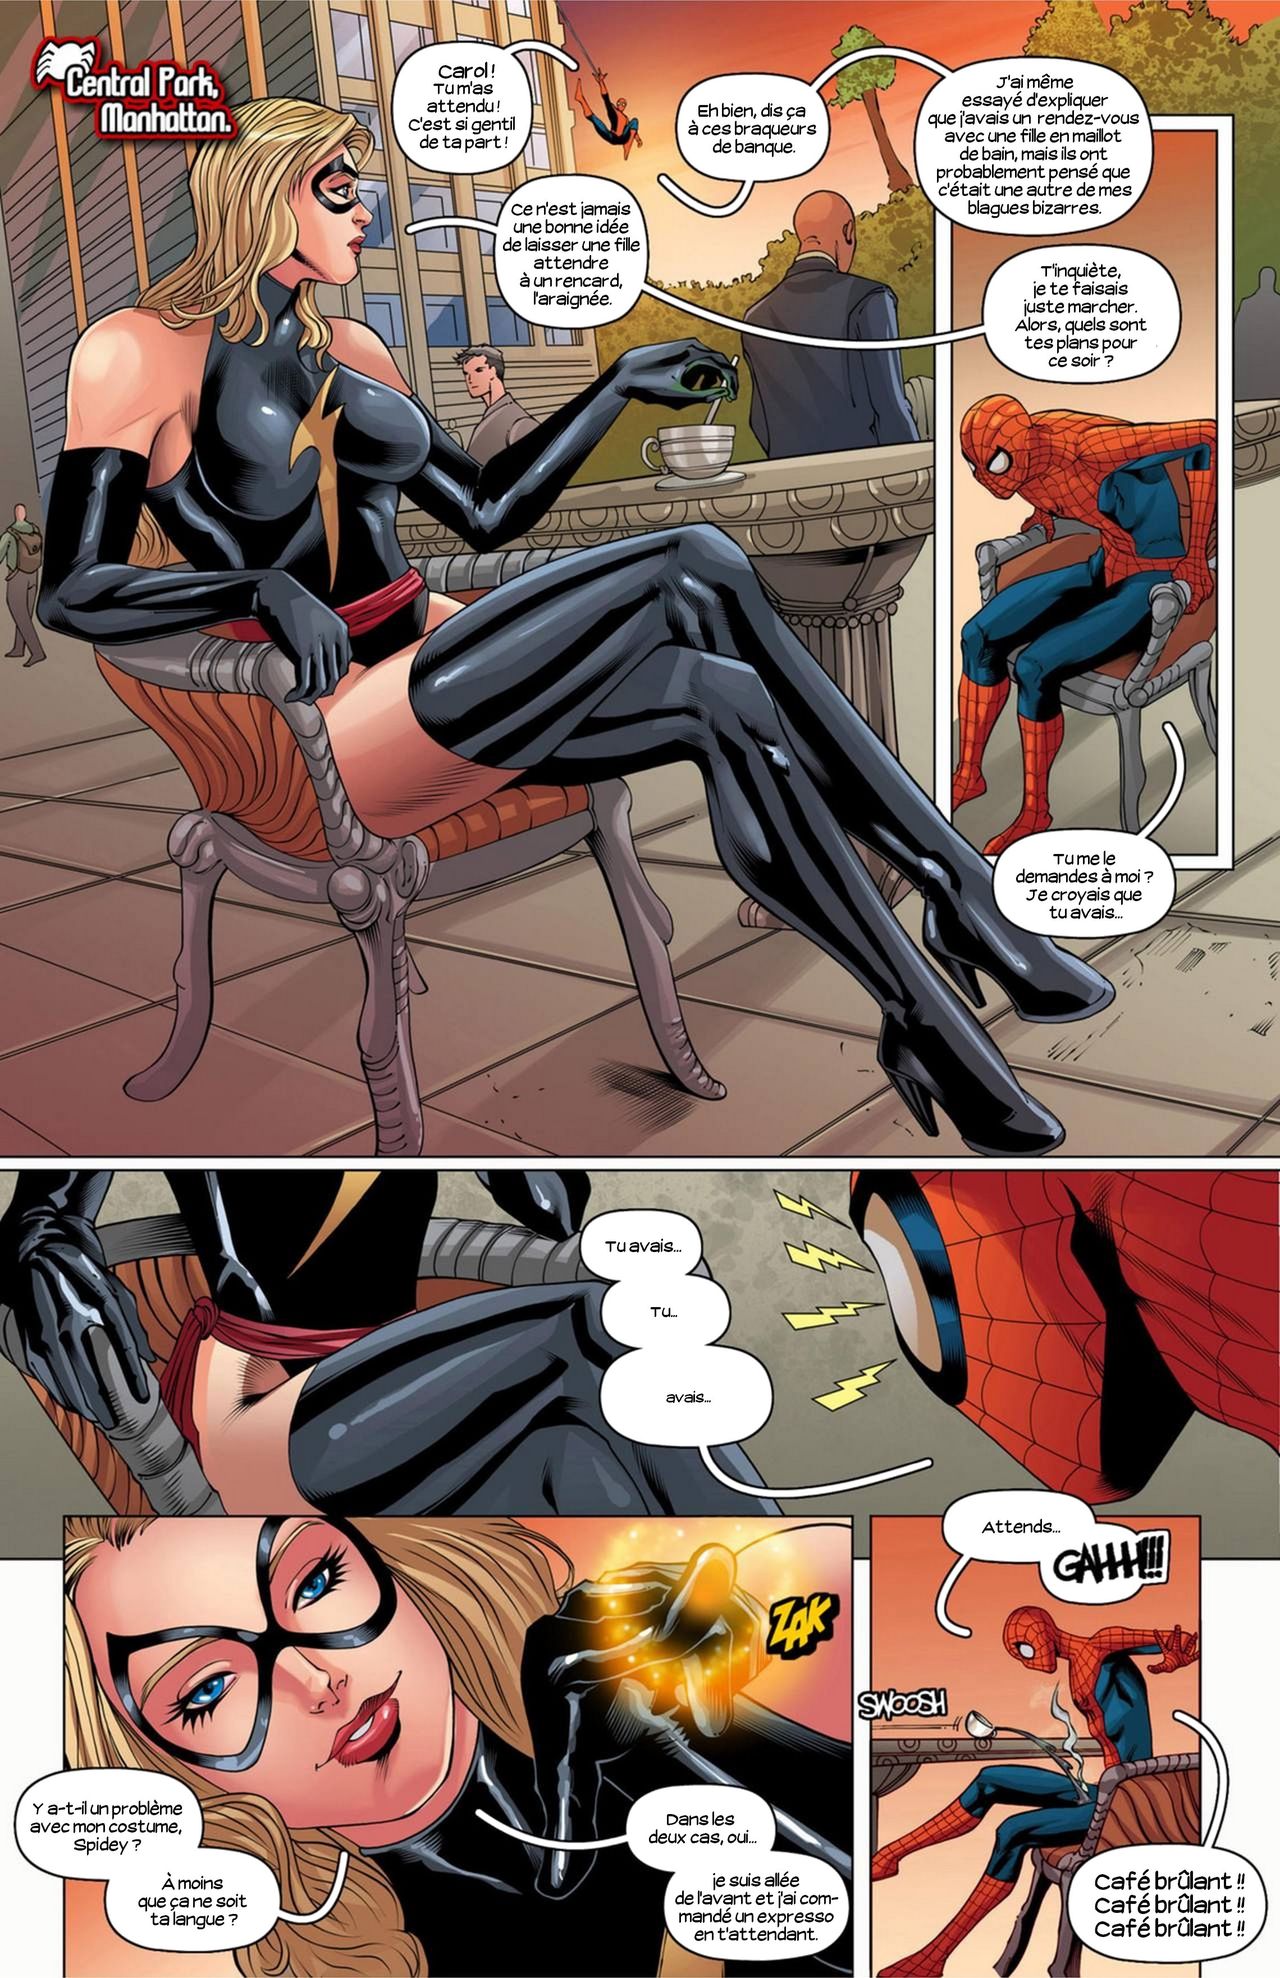 The  Spider-Man & Ms. Marvel numero d'image 1